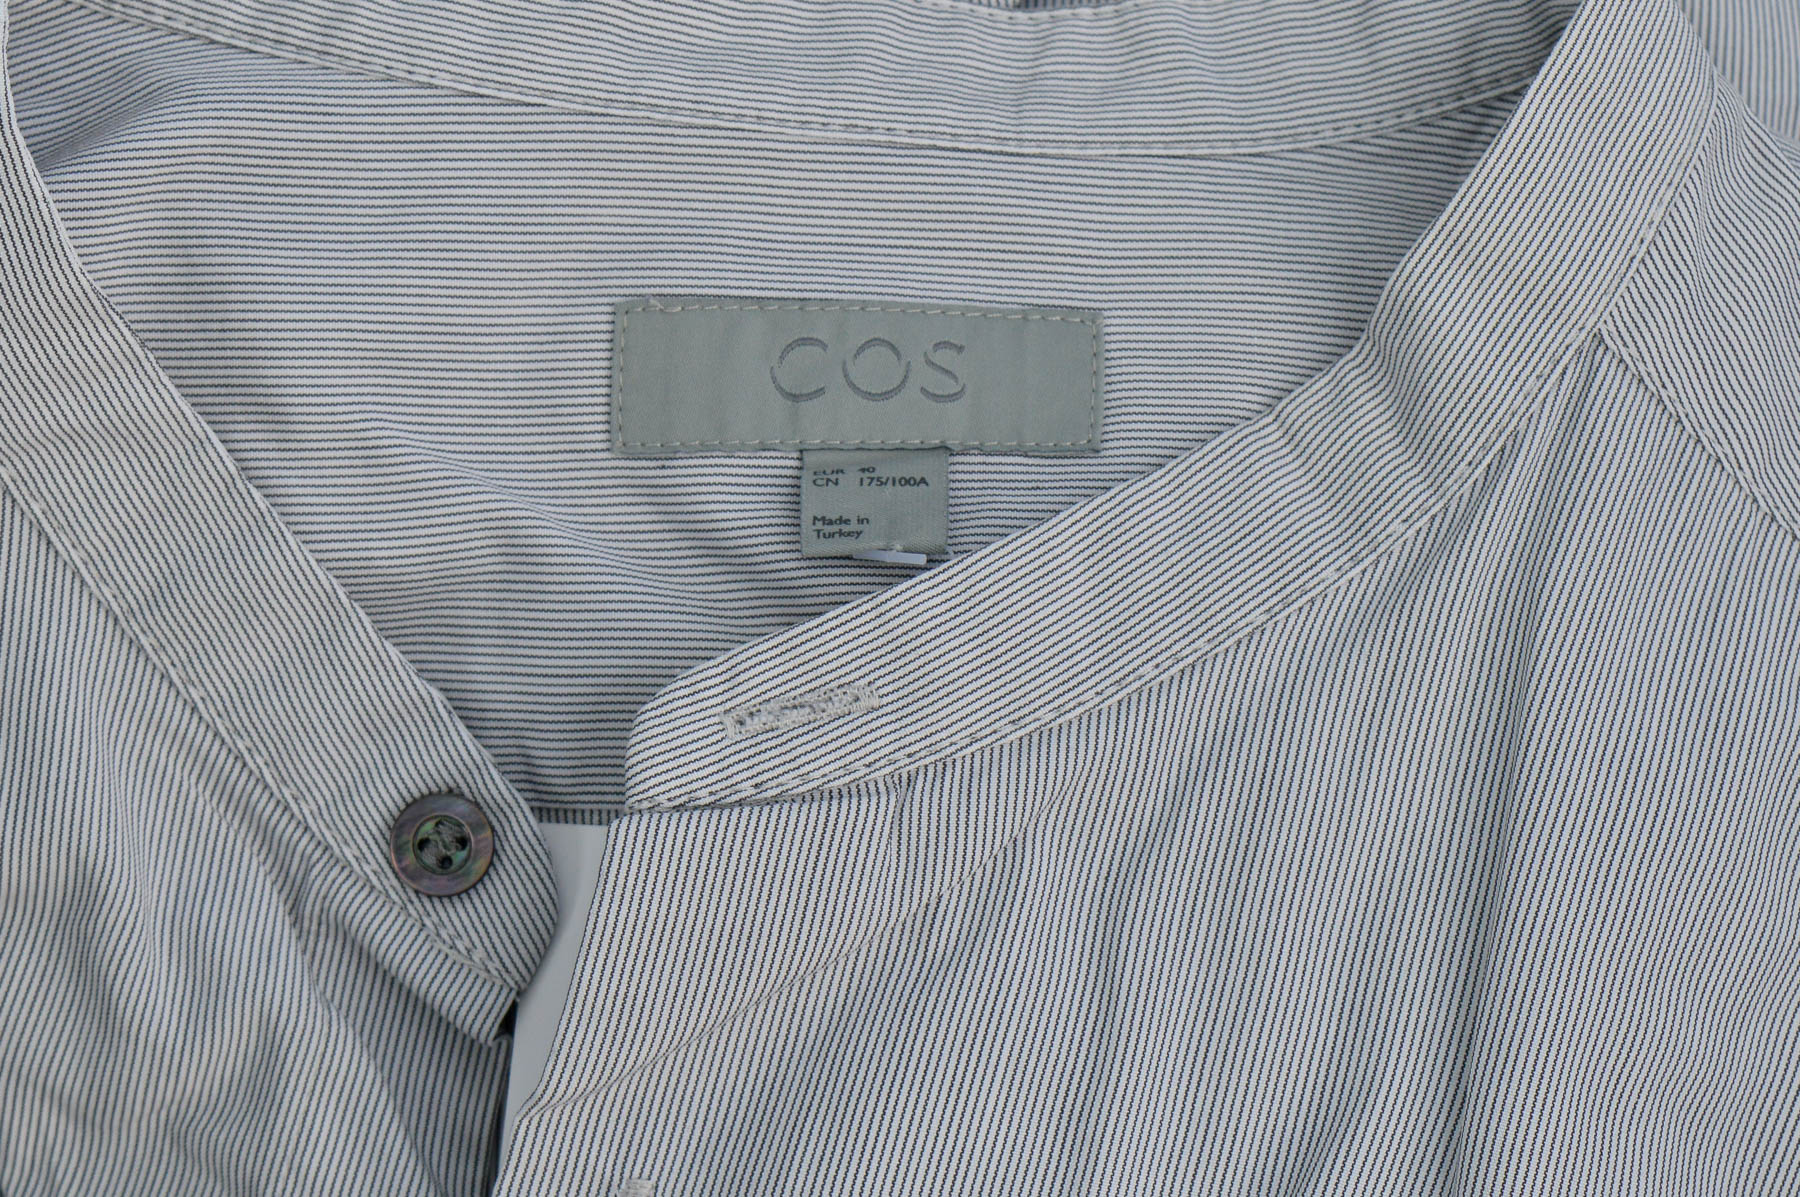 Men's shirt - COS - 2